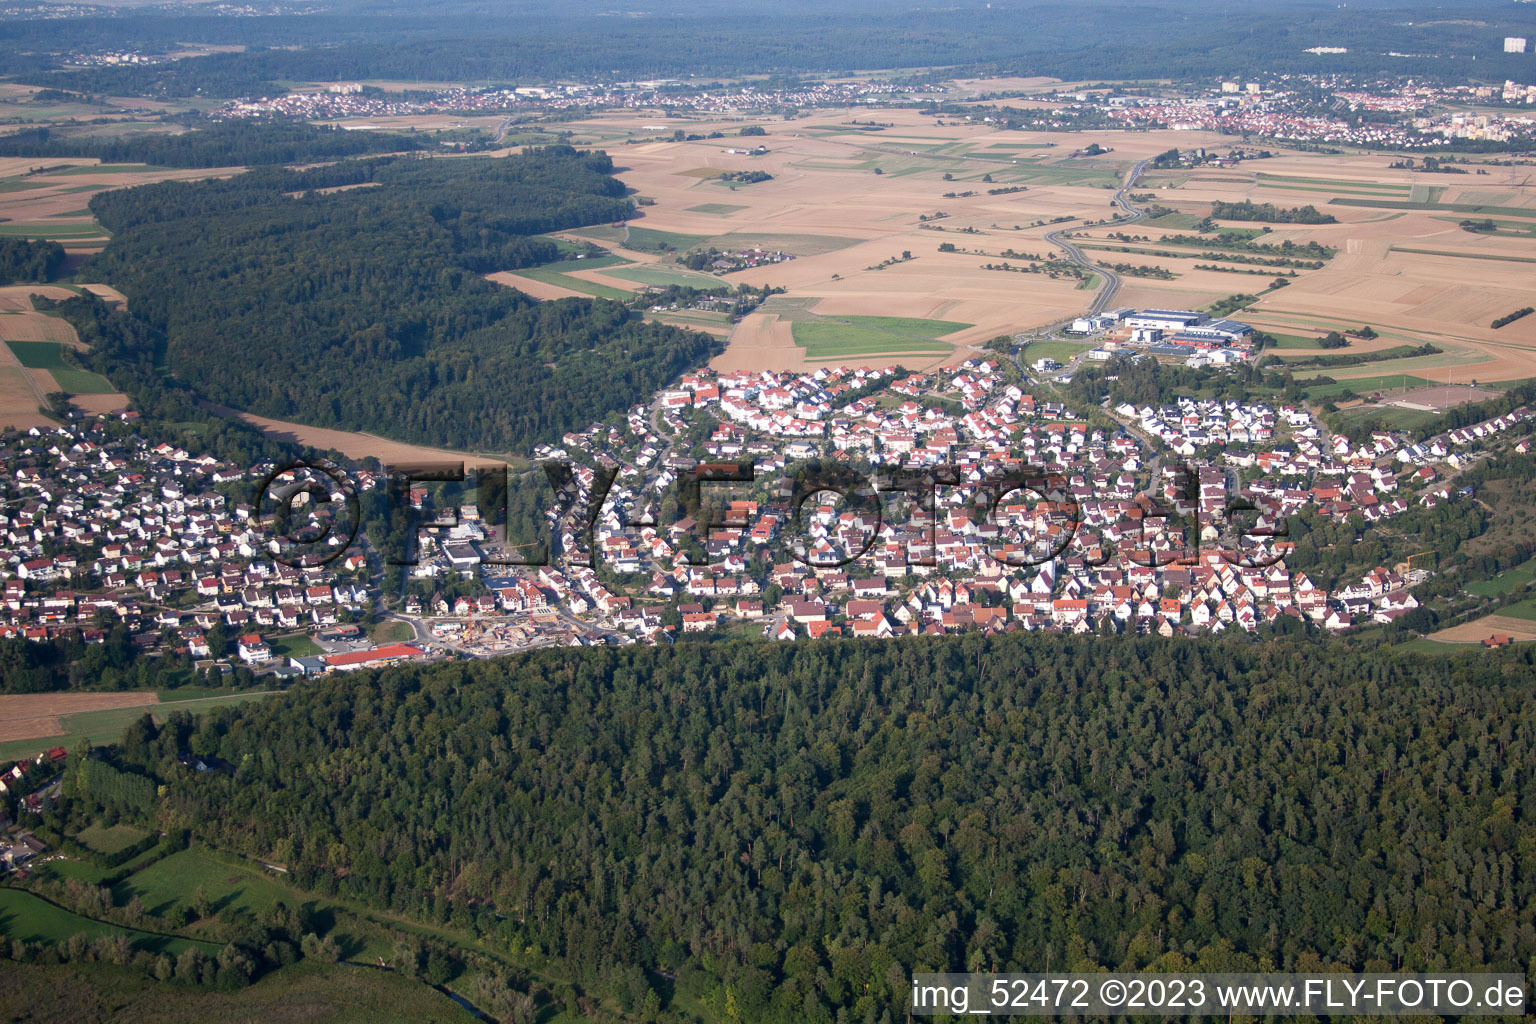 Bird's eye view of Grafenau in the state Baden-Wuerttemberg, Germany